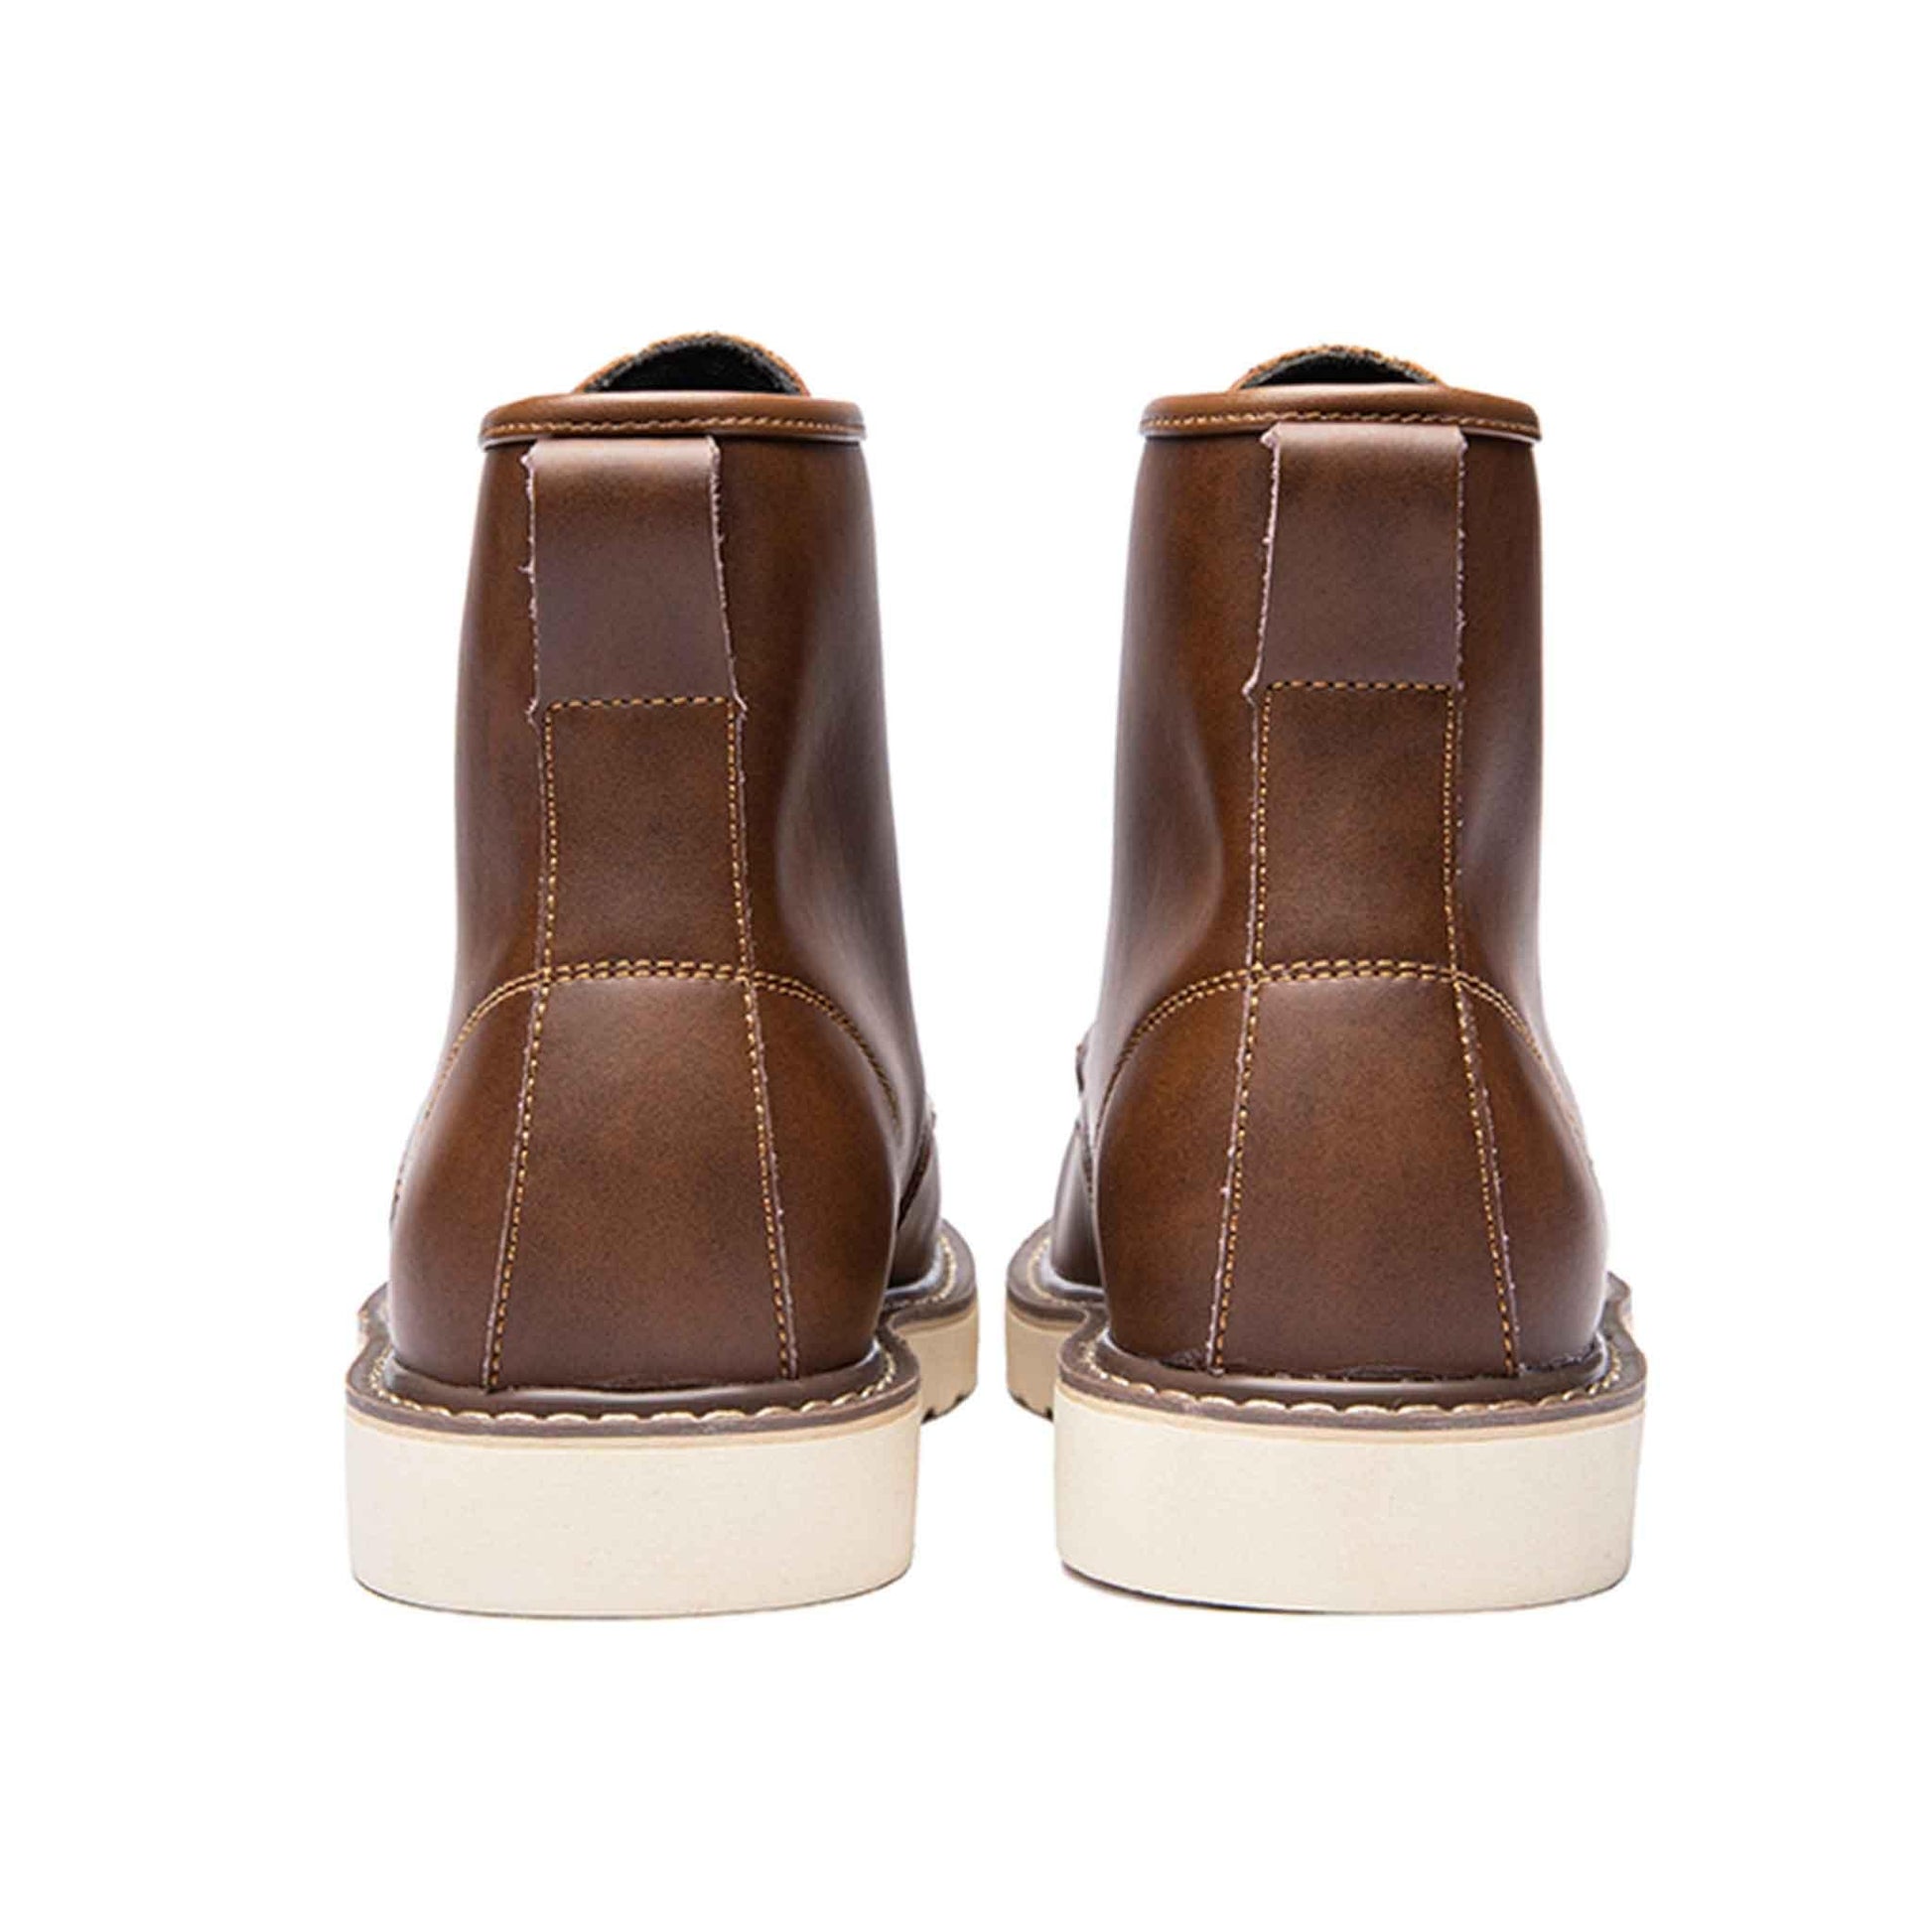 Men's 6" Soft Toe Work Boots - Classic Moc | C001 - USINE PRO Footwear